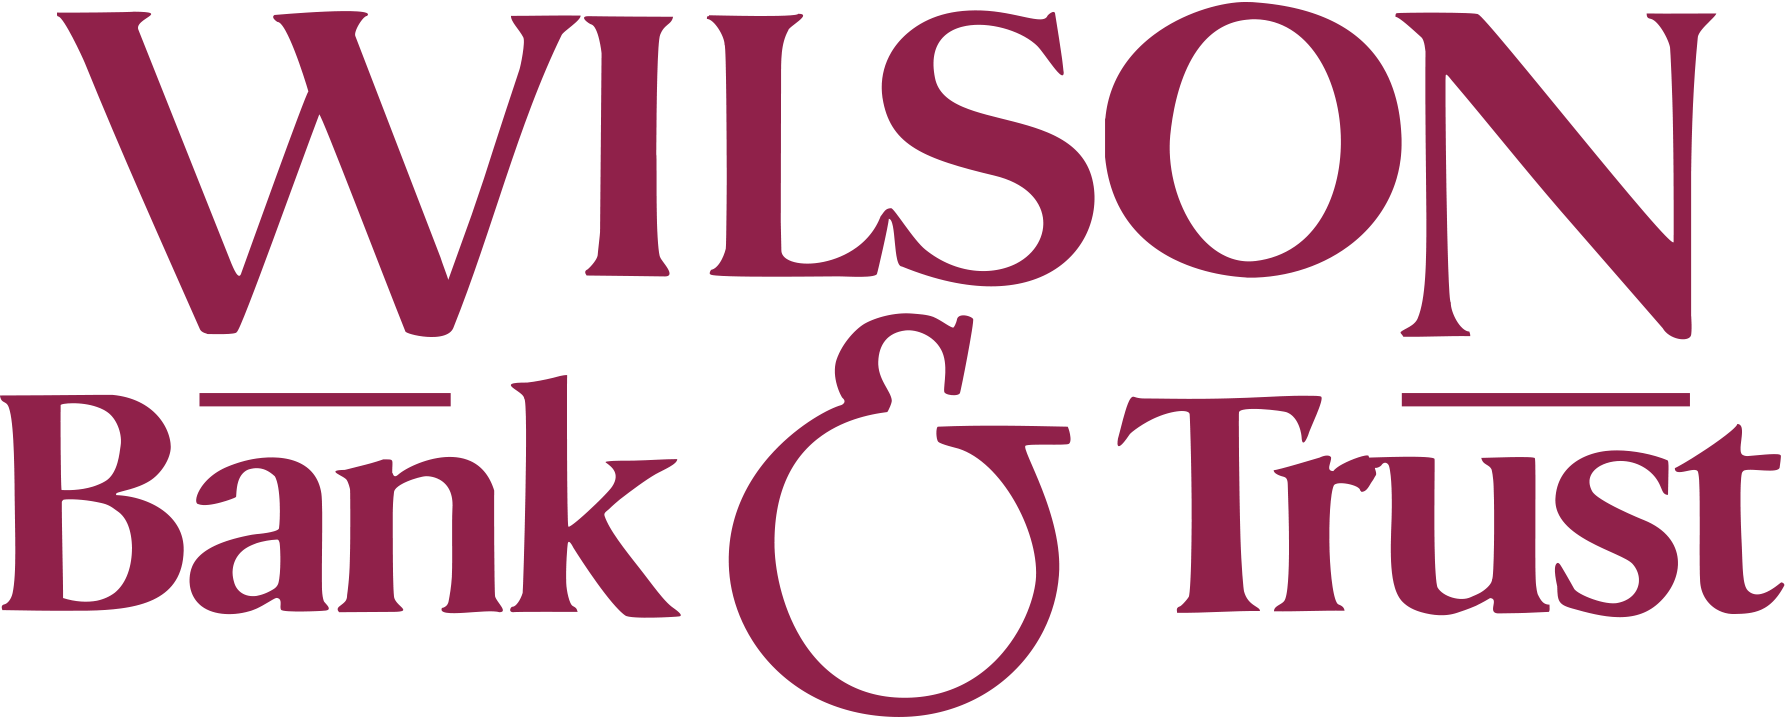 Wilson Bank & Trust Logo